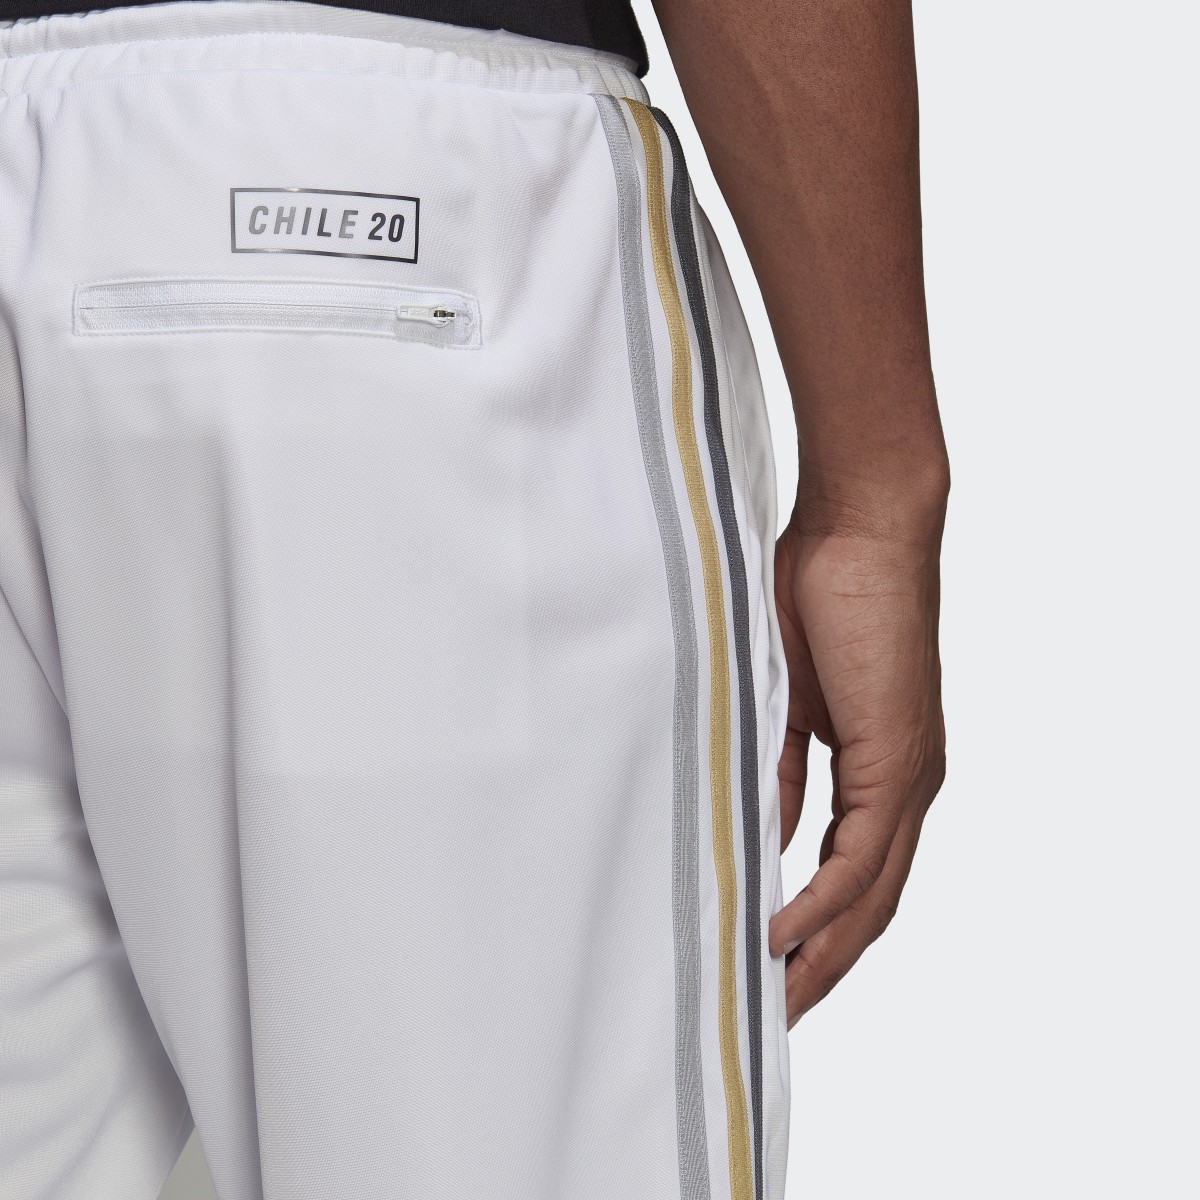 Adidas Chile 20 Track Pants. 5